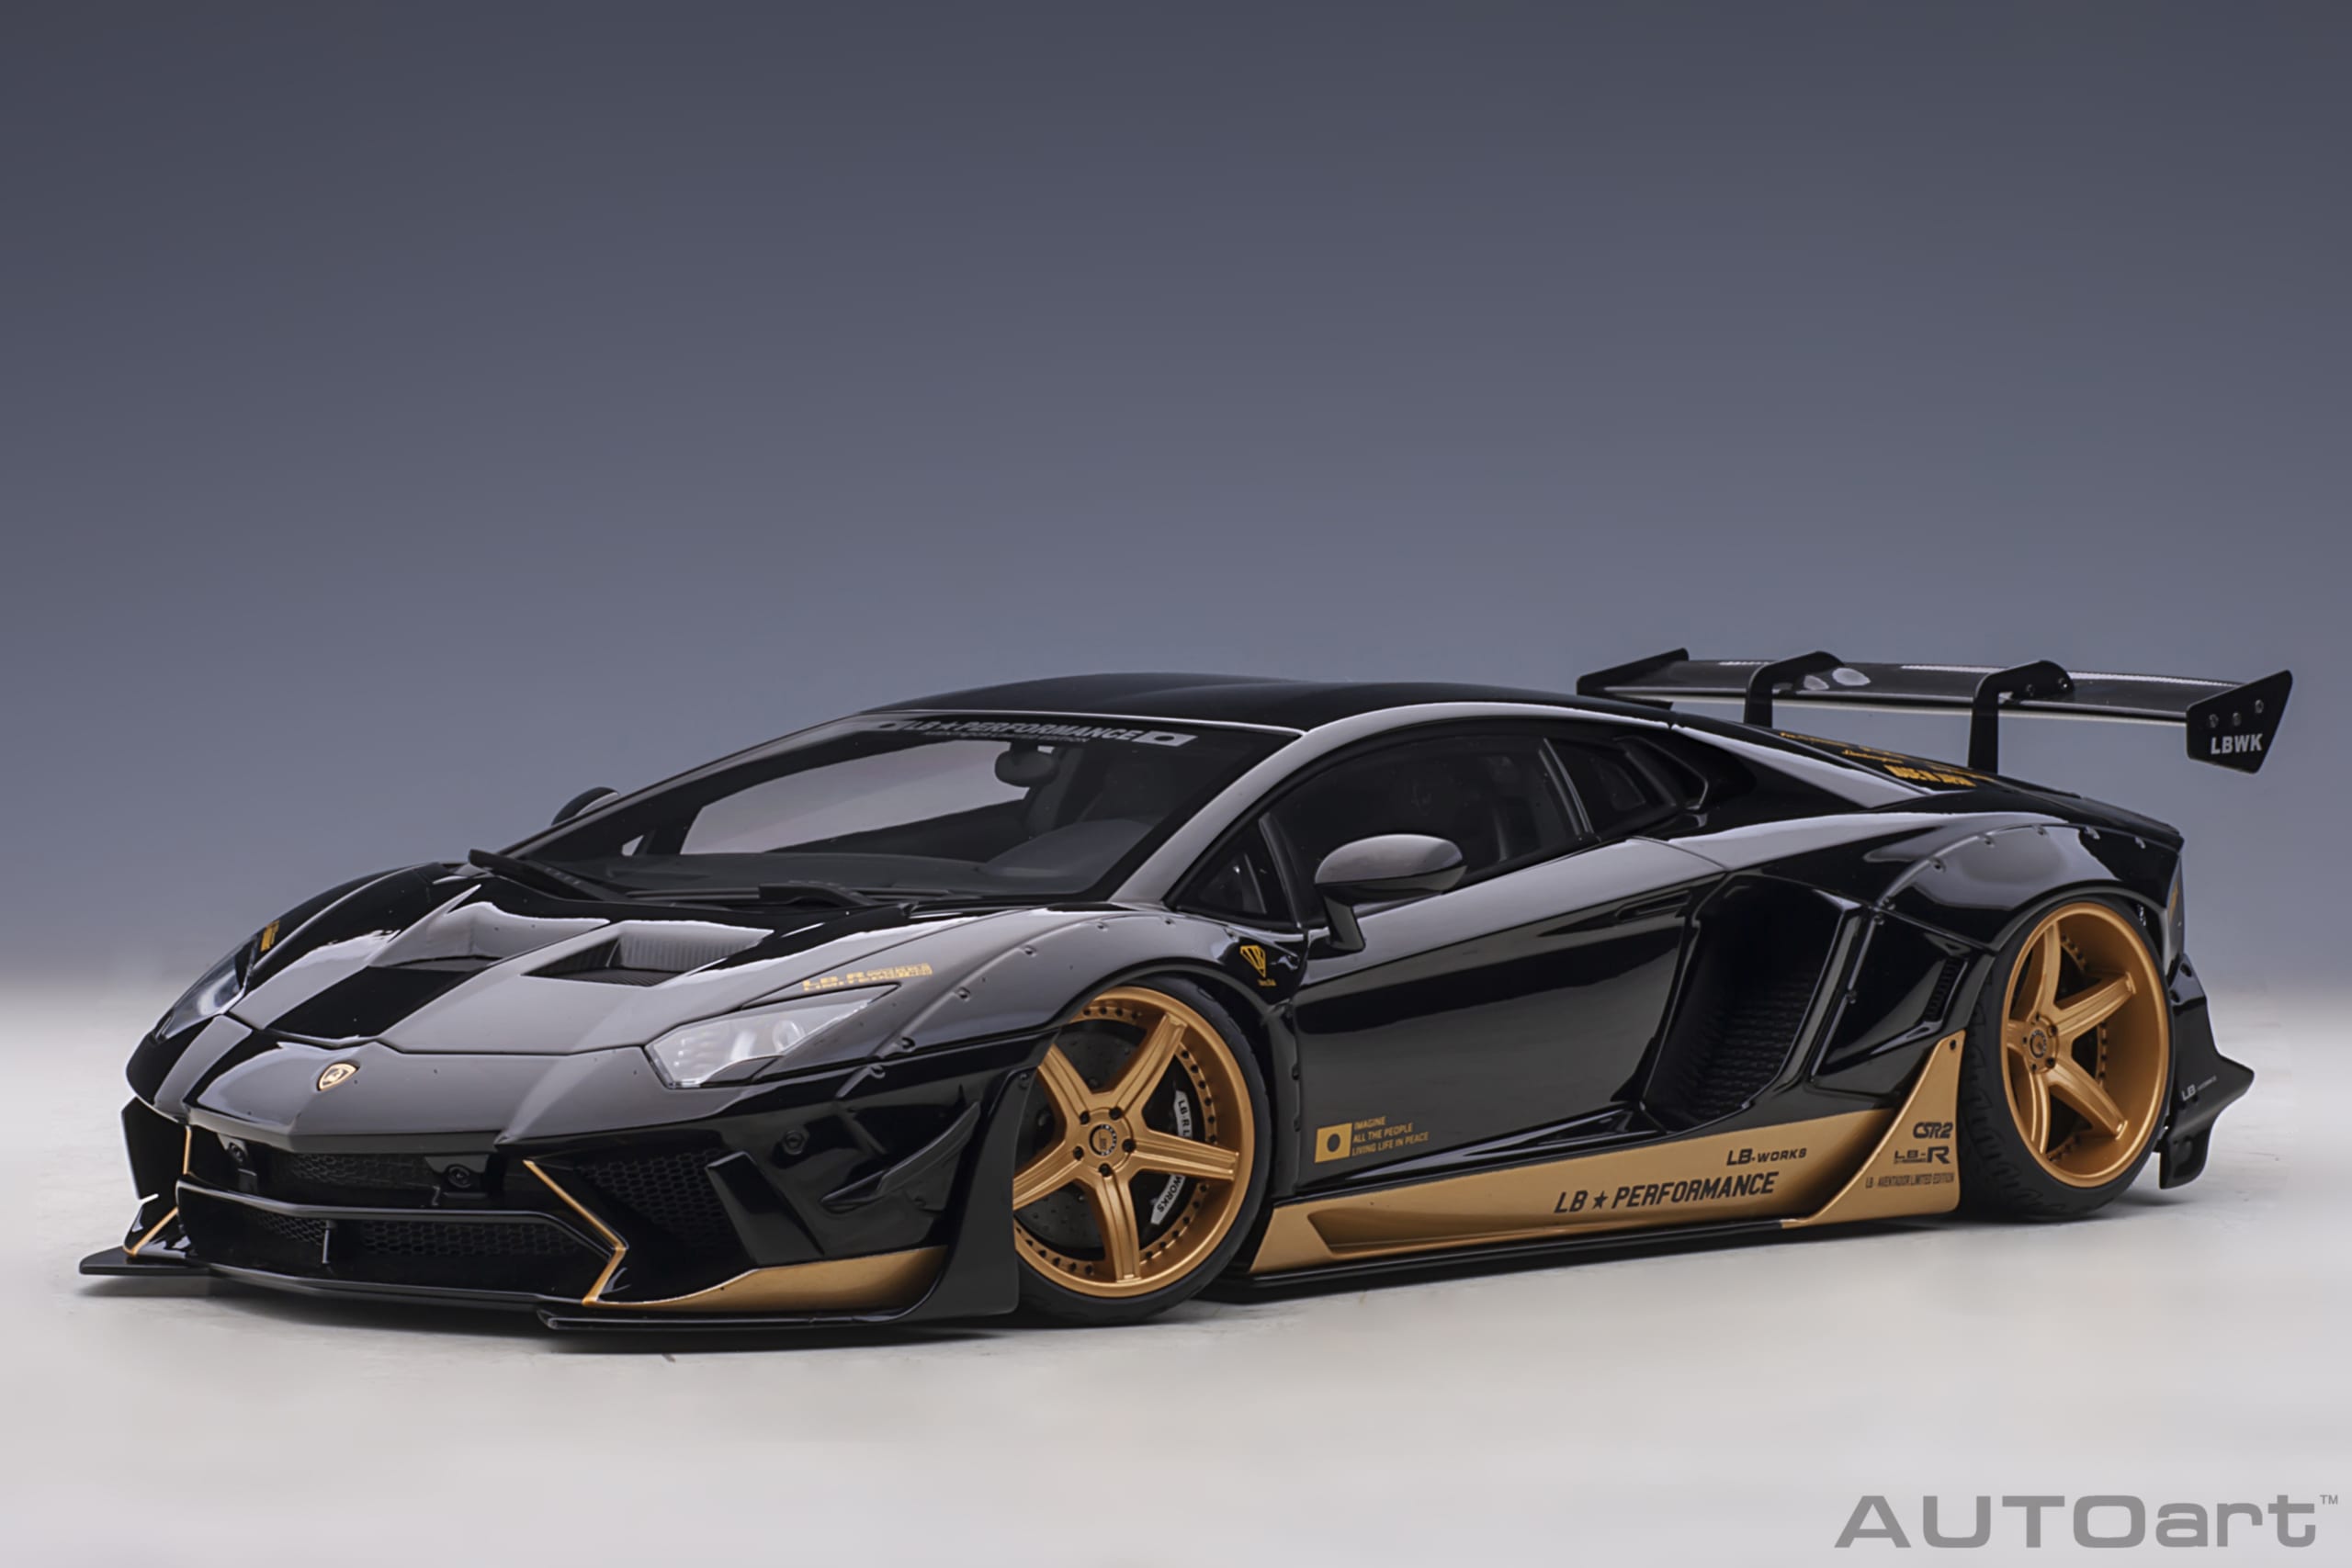 Autoart 79184 Liberty Walk Lamborghini Aventador - Black/Gold 1:18